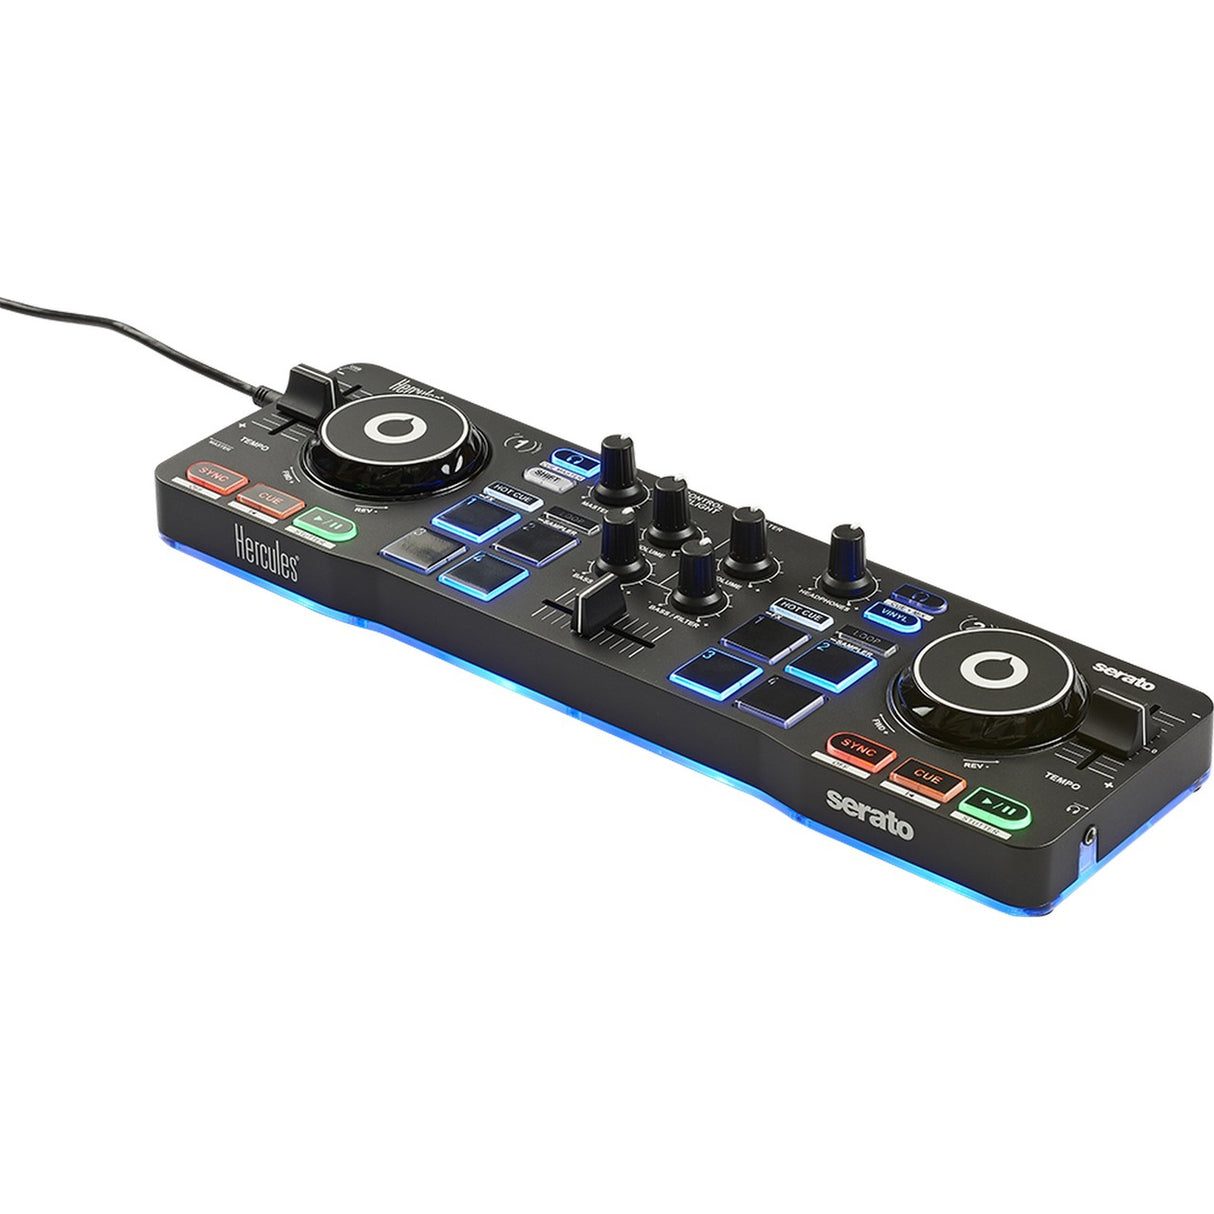 Hercules DJControl, Compact 2-Channel DJ Controller